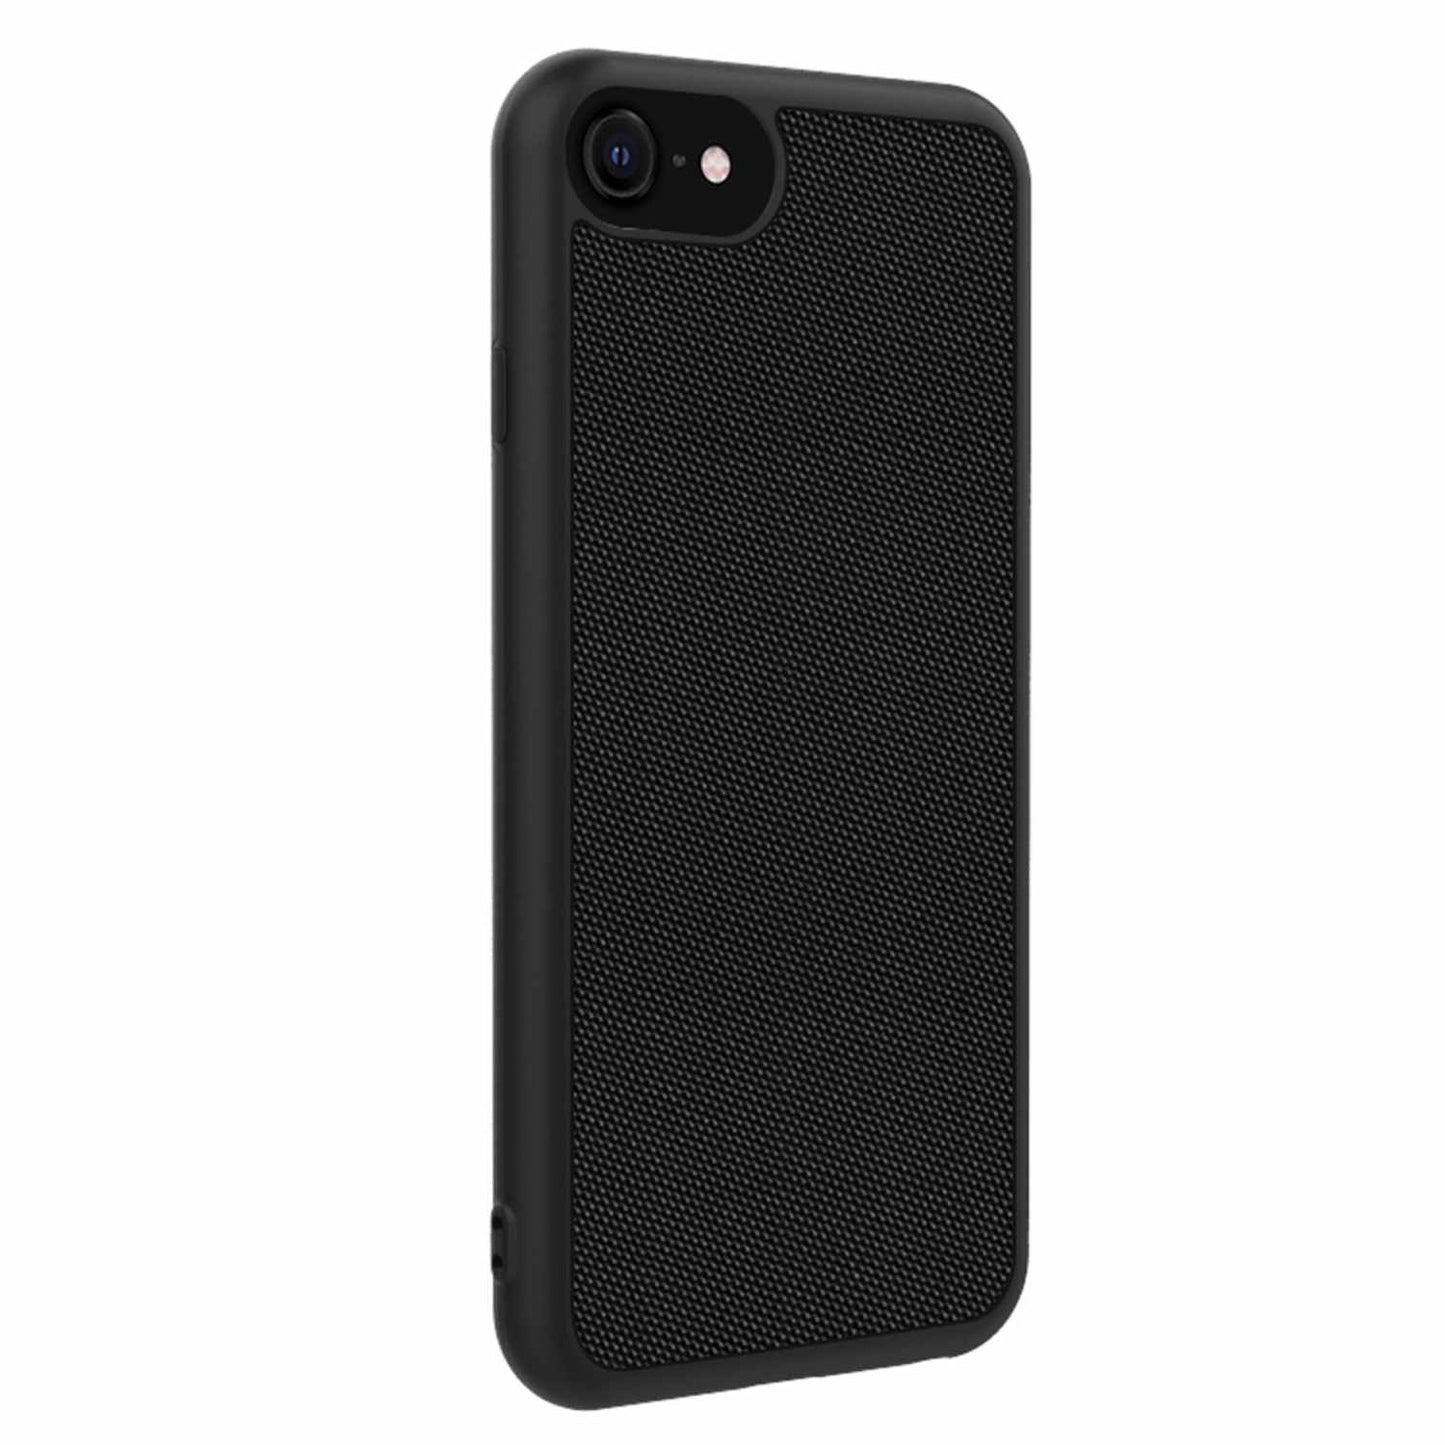 Tru Nylon Case Black for iPhone SE/8/7